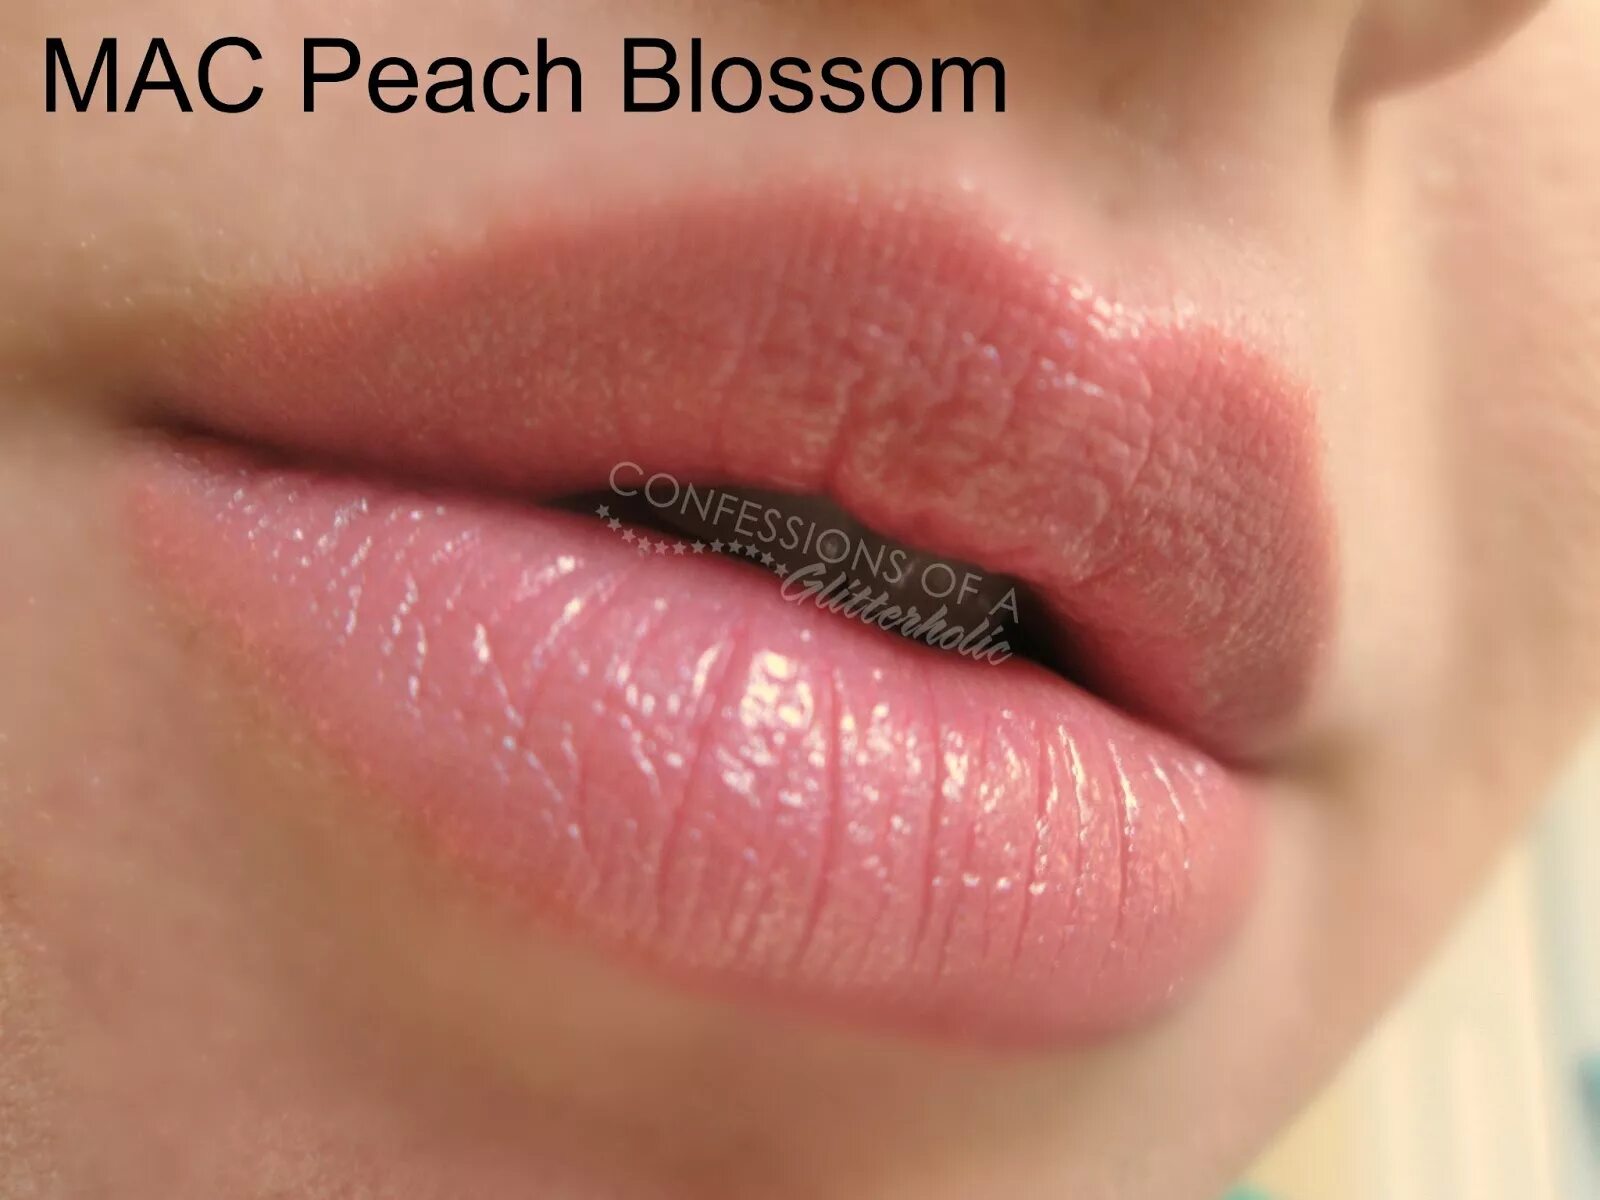 Помада Mac 216 Peach Blossom. Mac 812 Peach Blossom помада. Mac Peach Blossom помада. Mac Lipstick Cremesheen Peach Blossom.